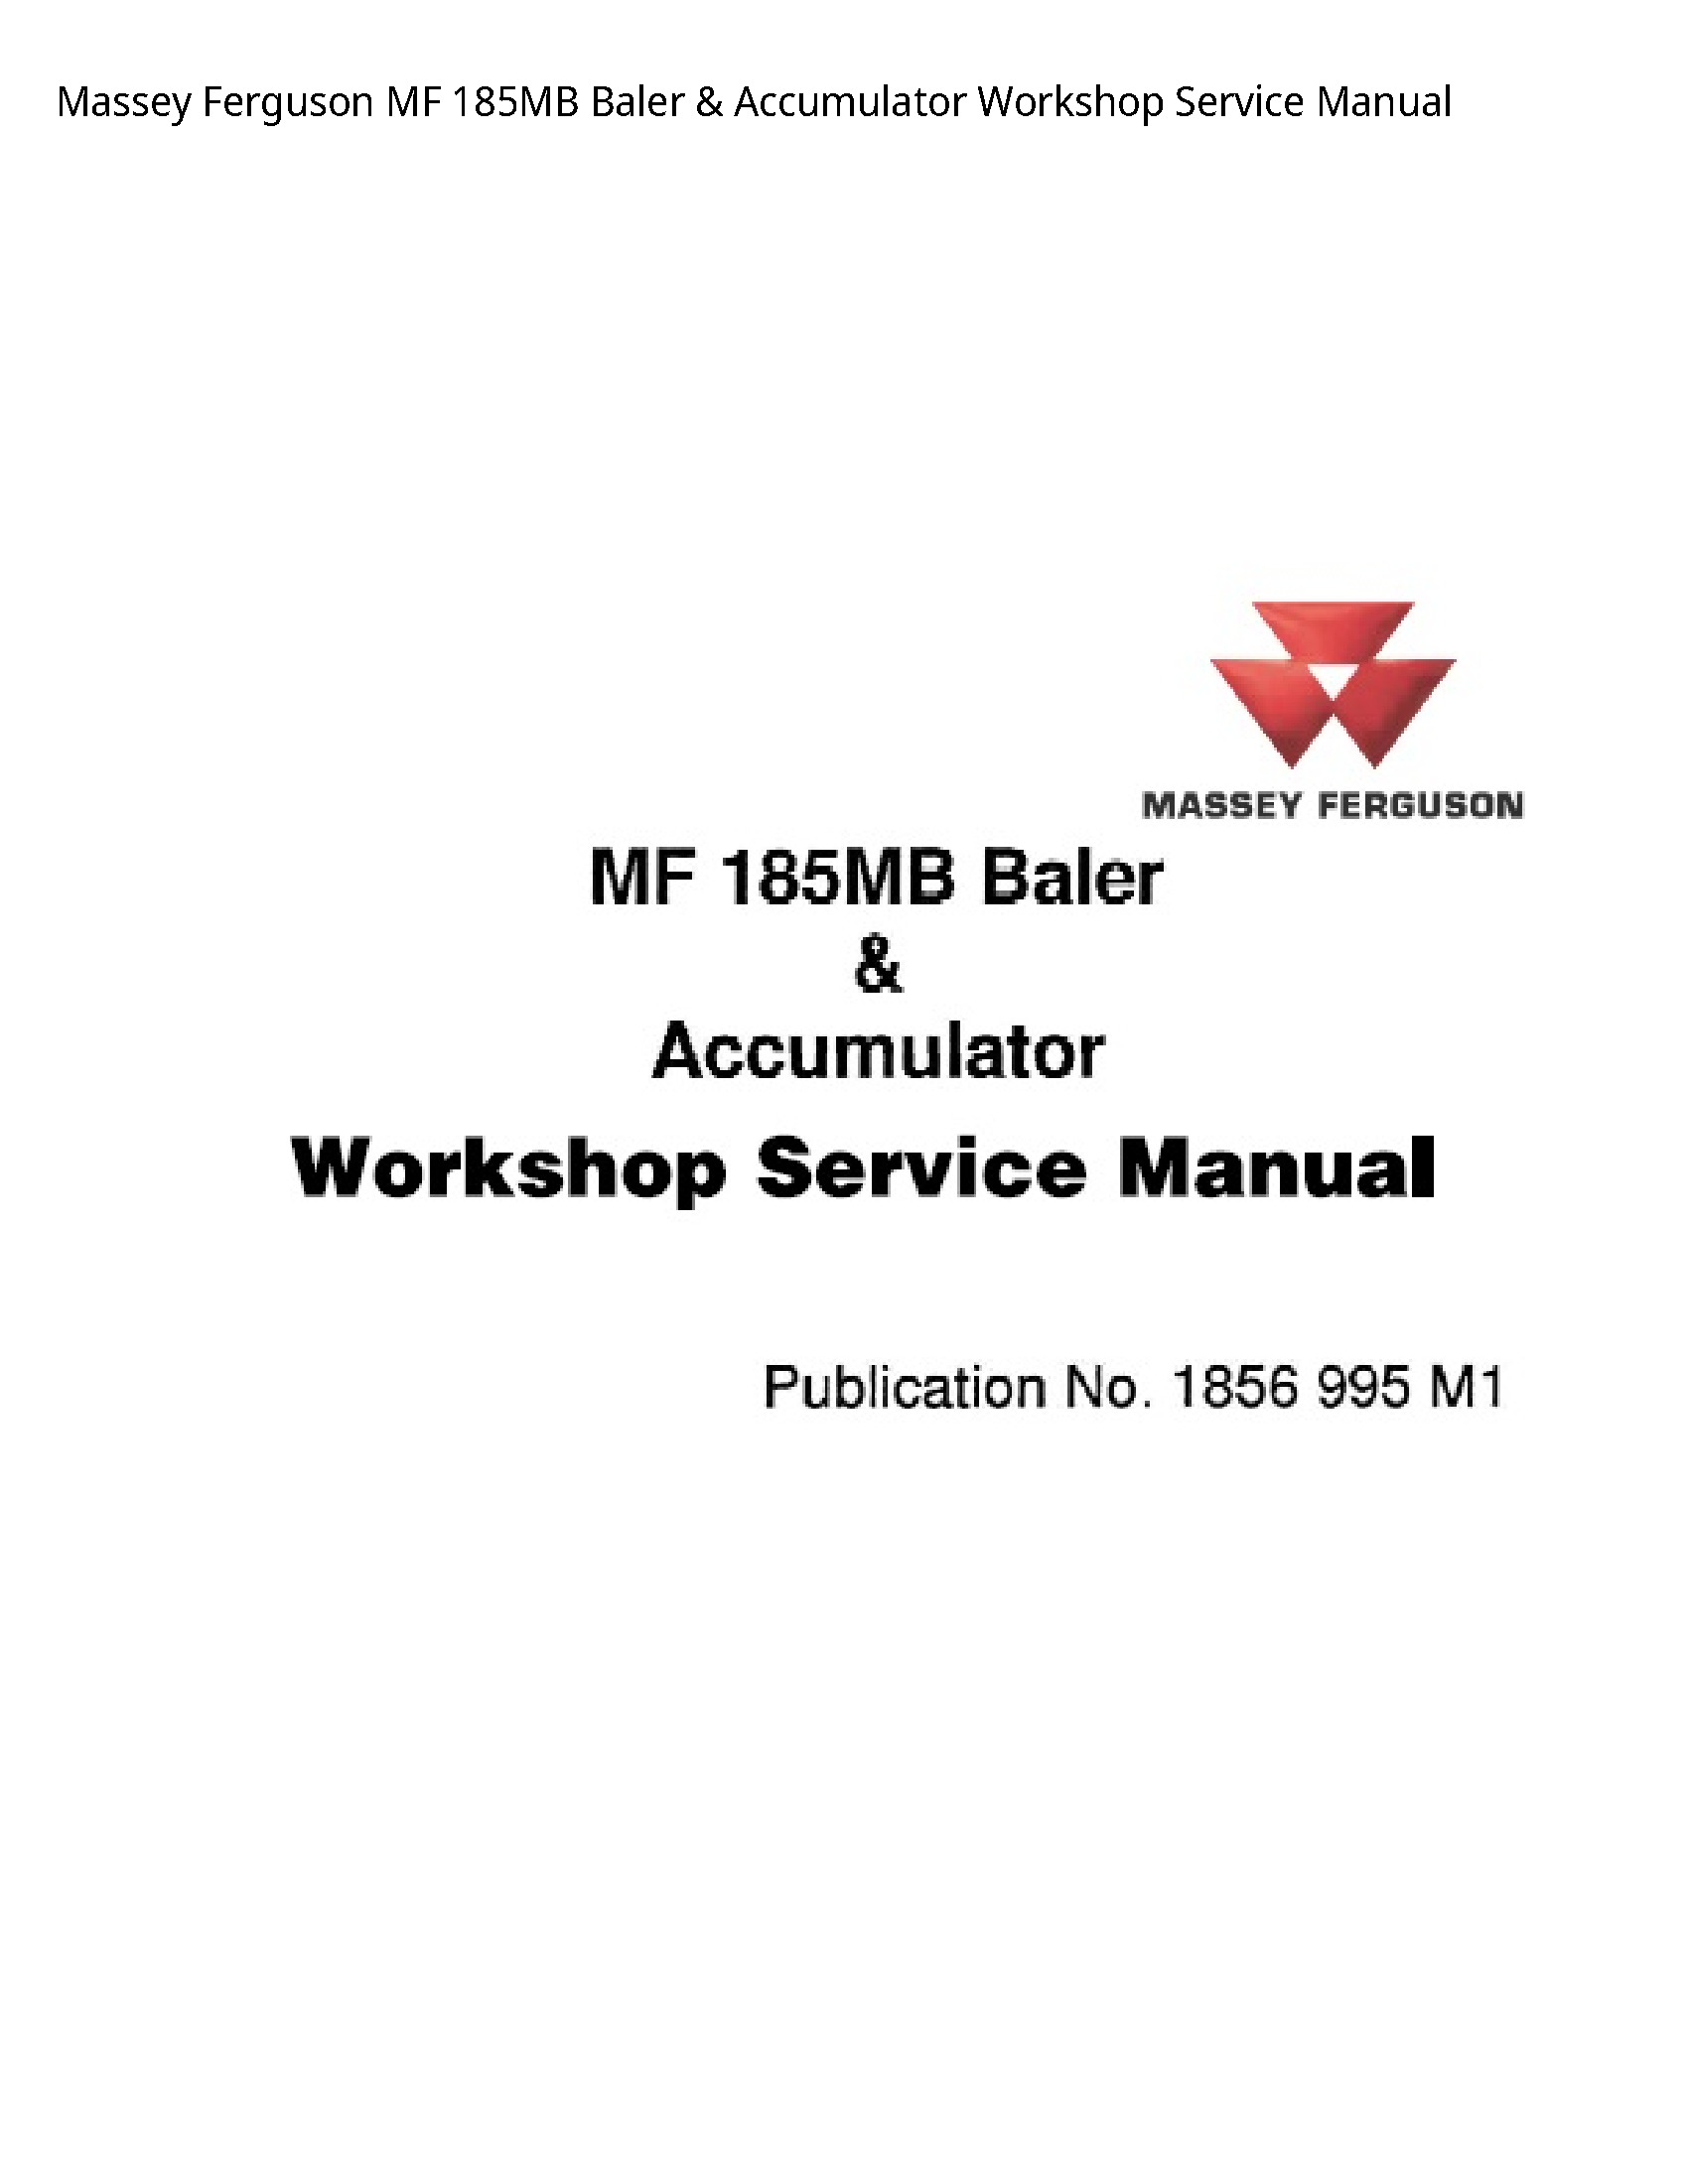 Massey Ferguson 185MB MF Baler Accumulator Service manual